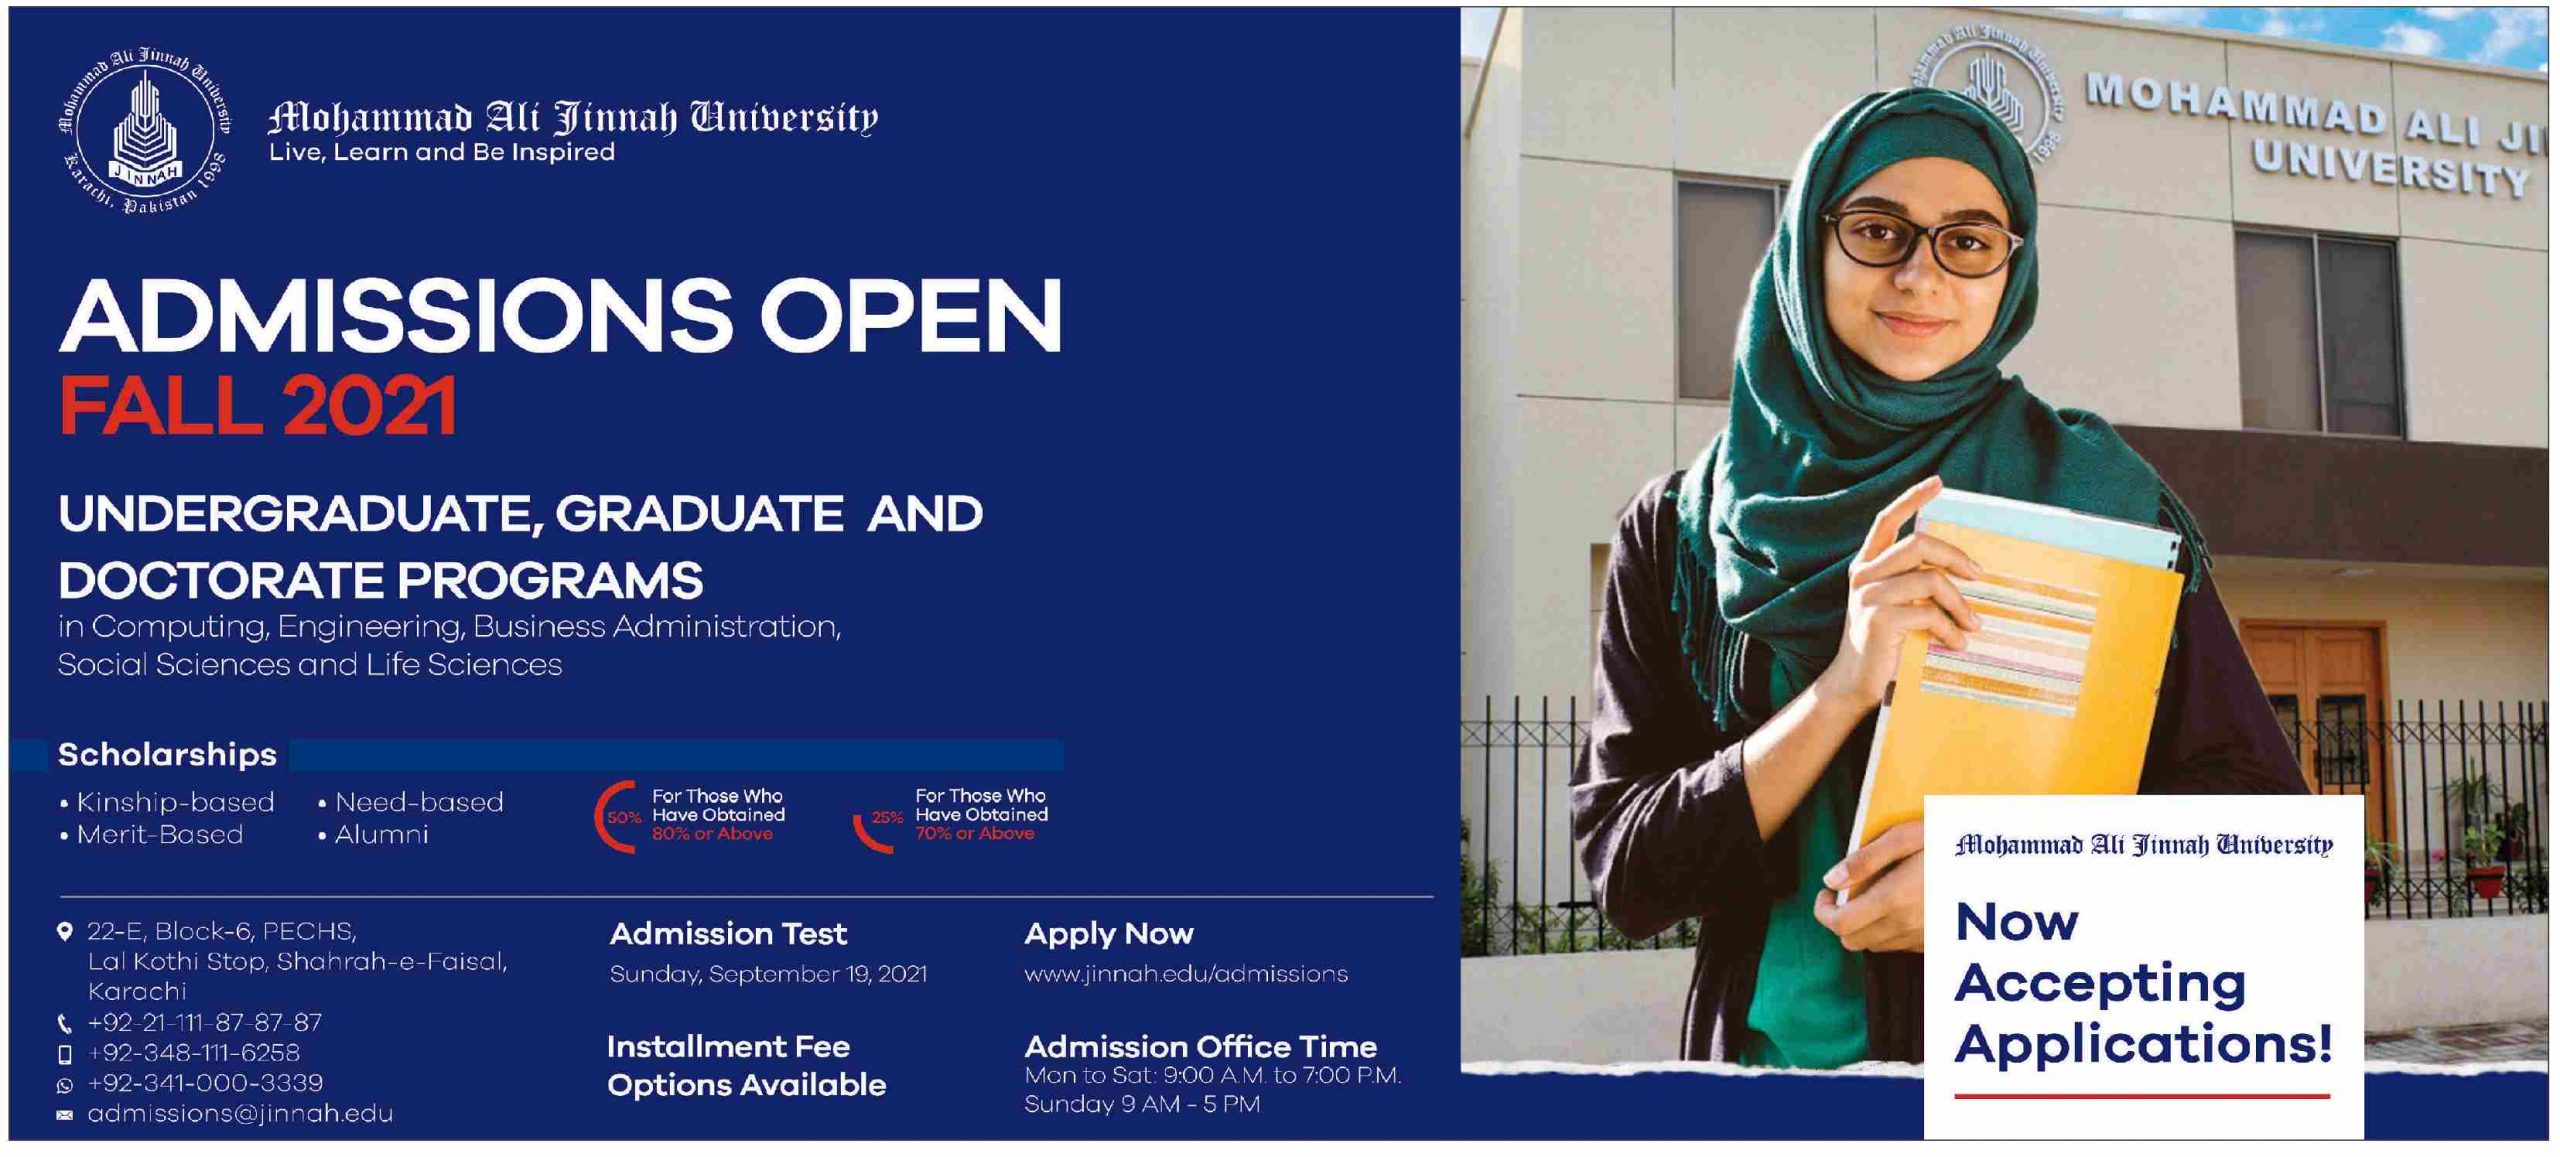 Mohammad Ali Jinnah University Admission 2022 Fall